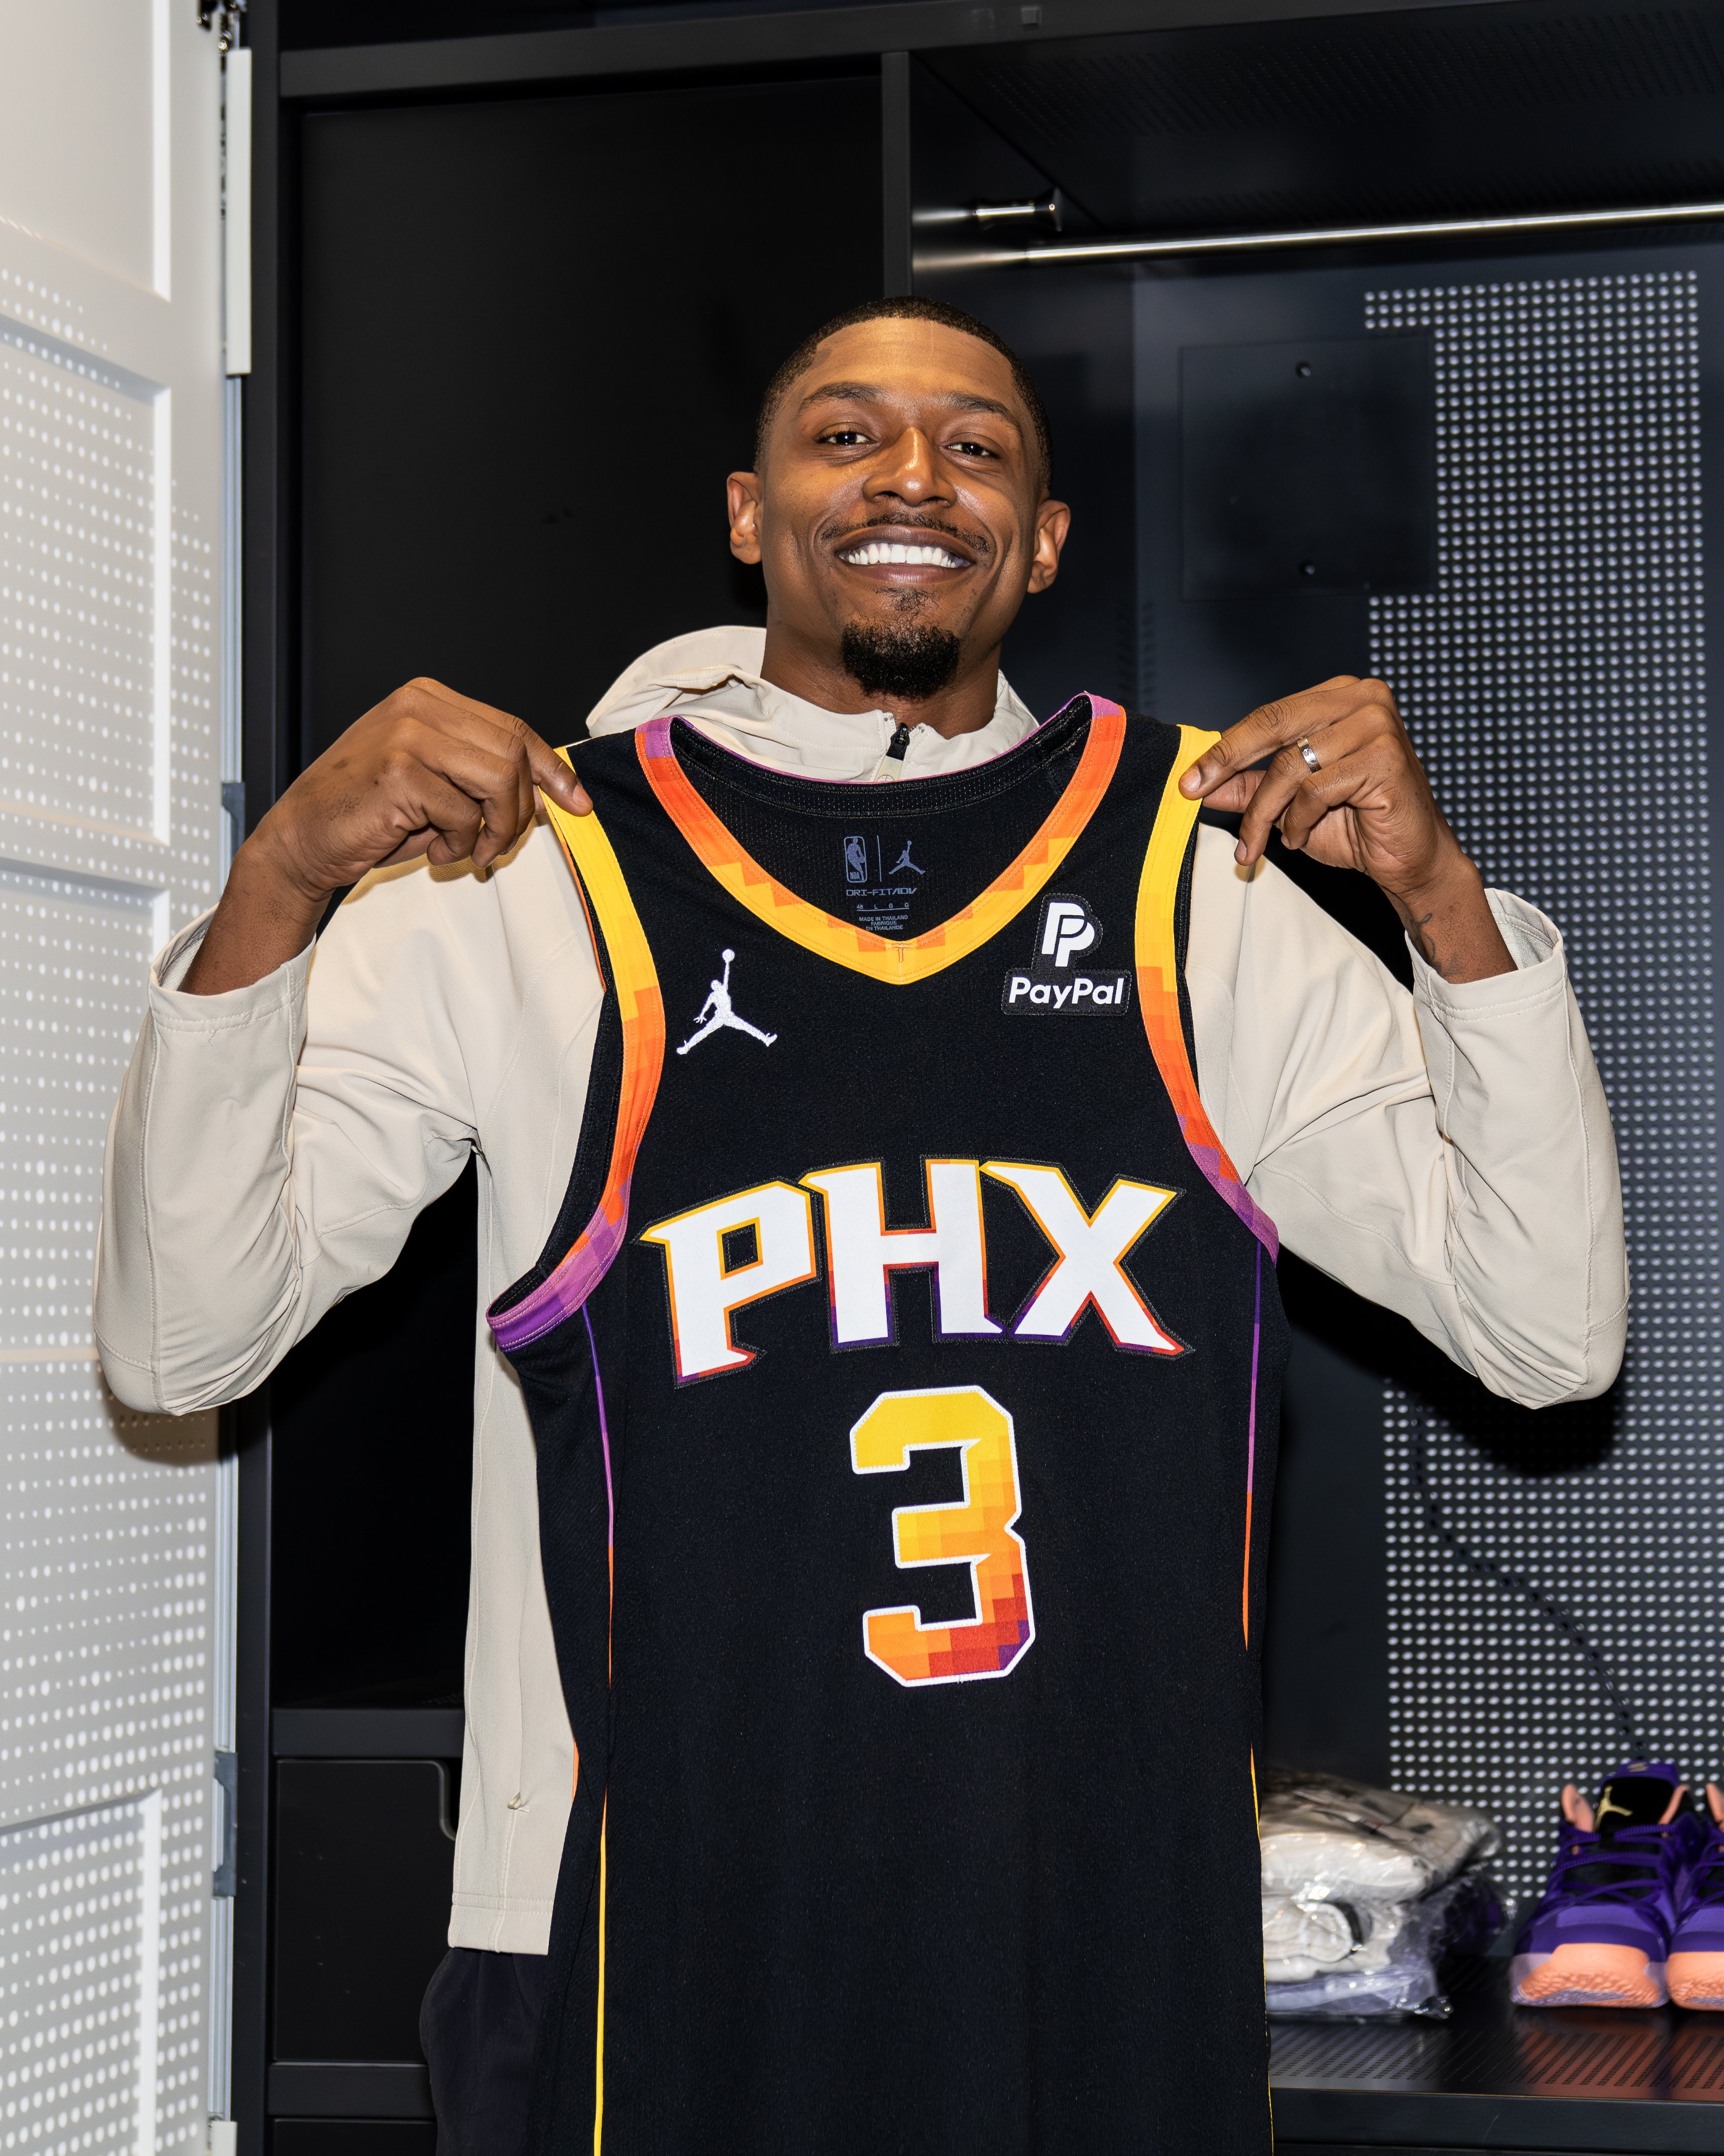 Phoenix Suns on X: With his new threads 🔥 📍 @Verizon 5G